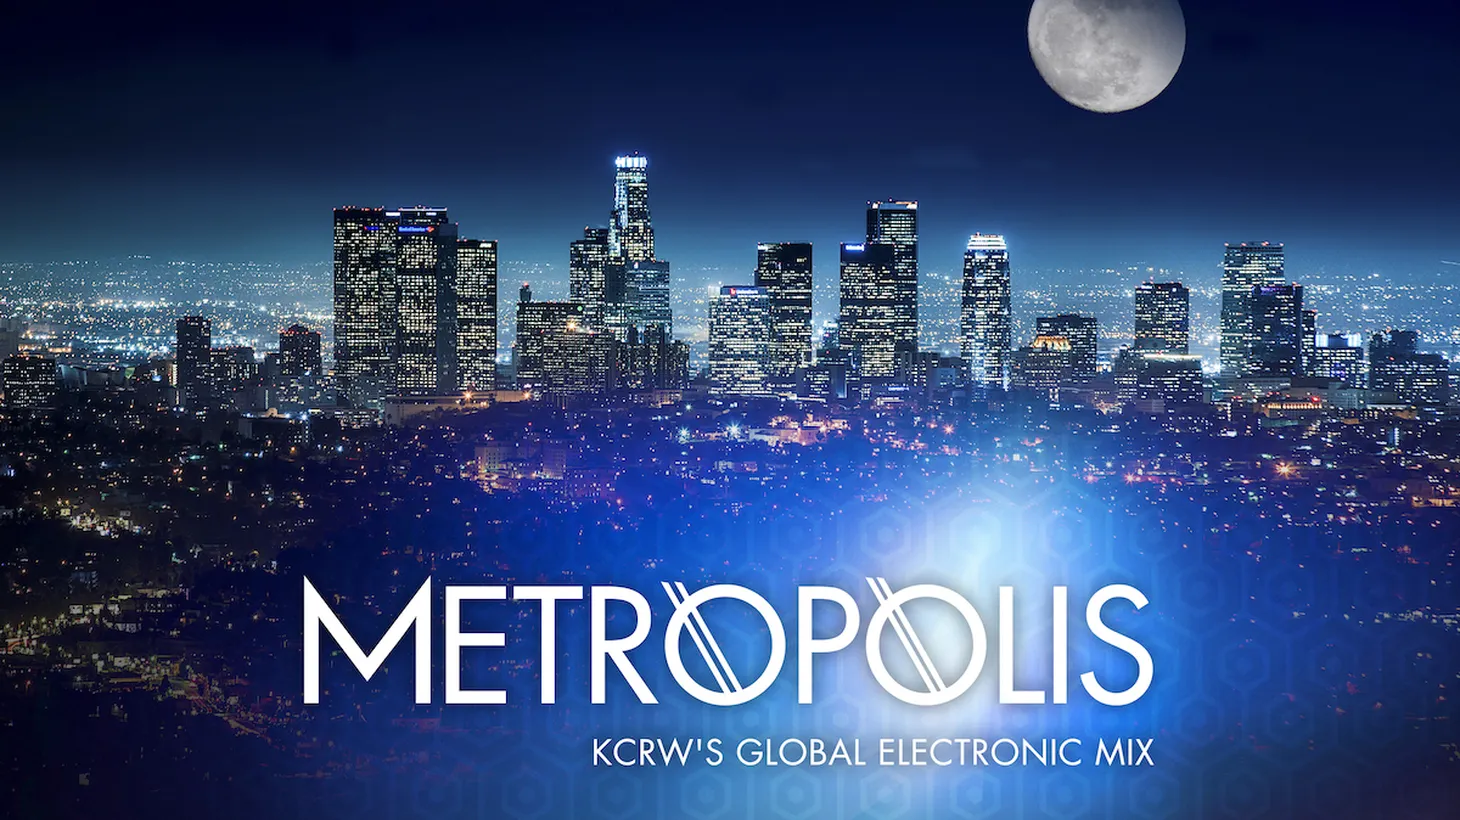 Metropolis playlist October 15, 2022.